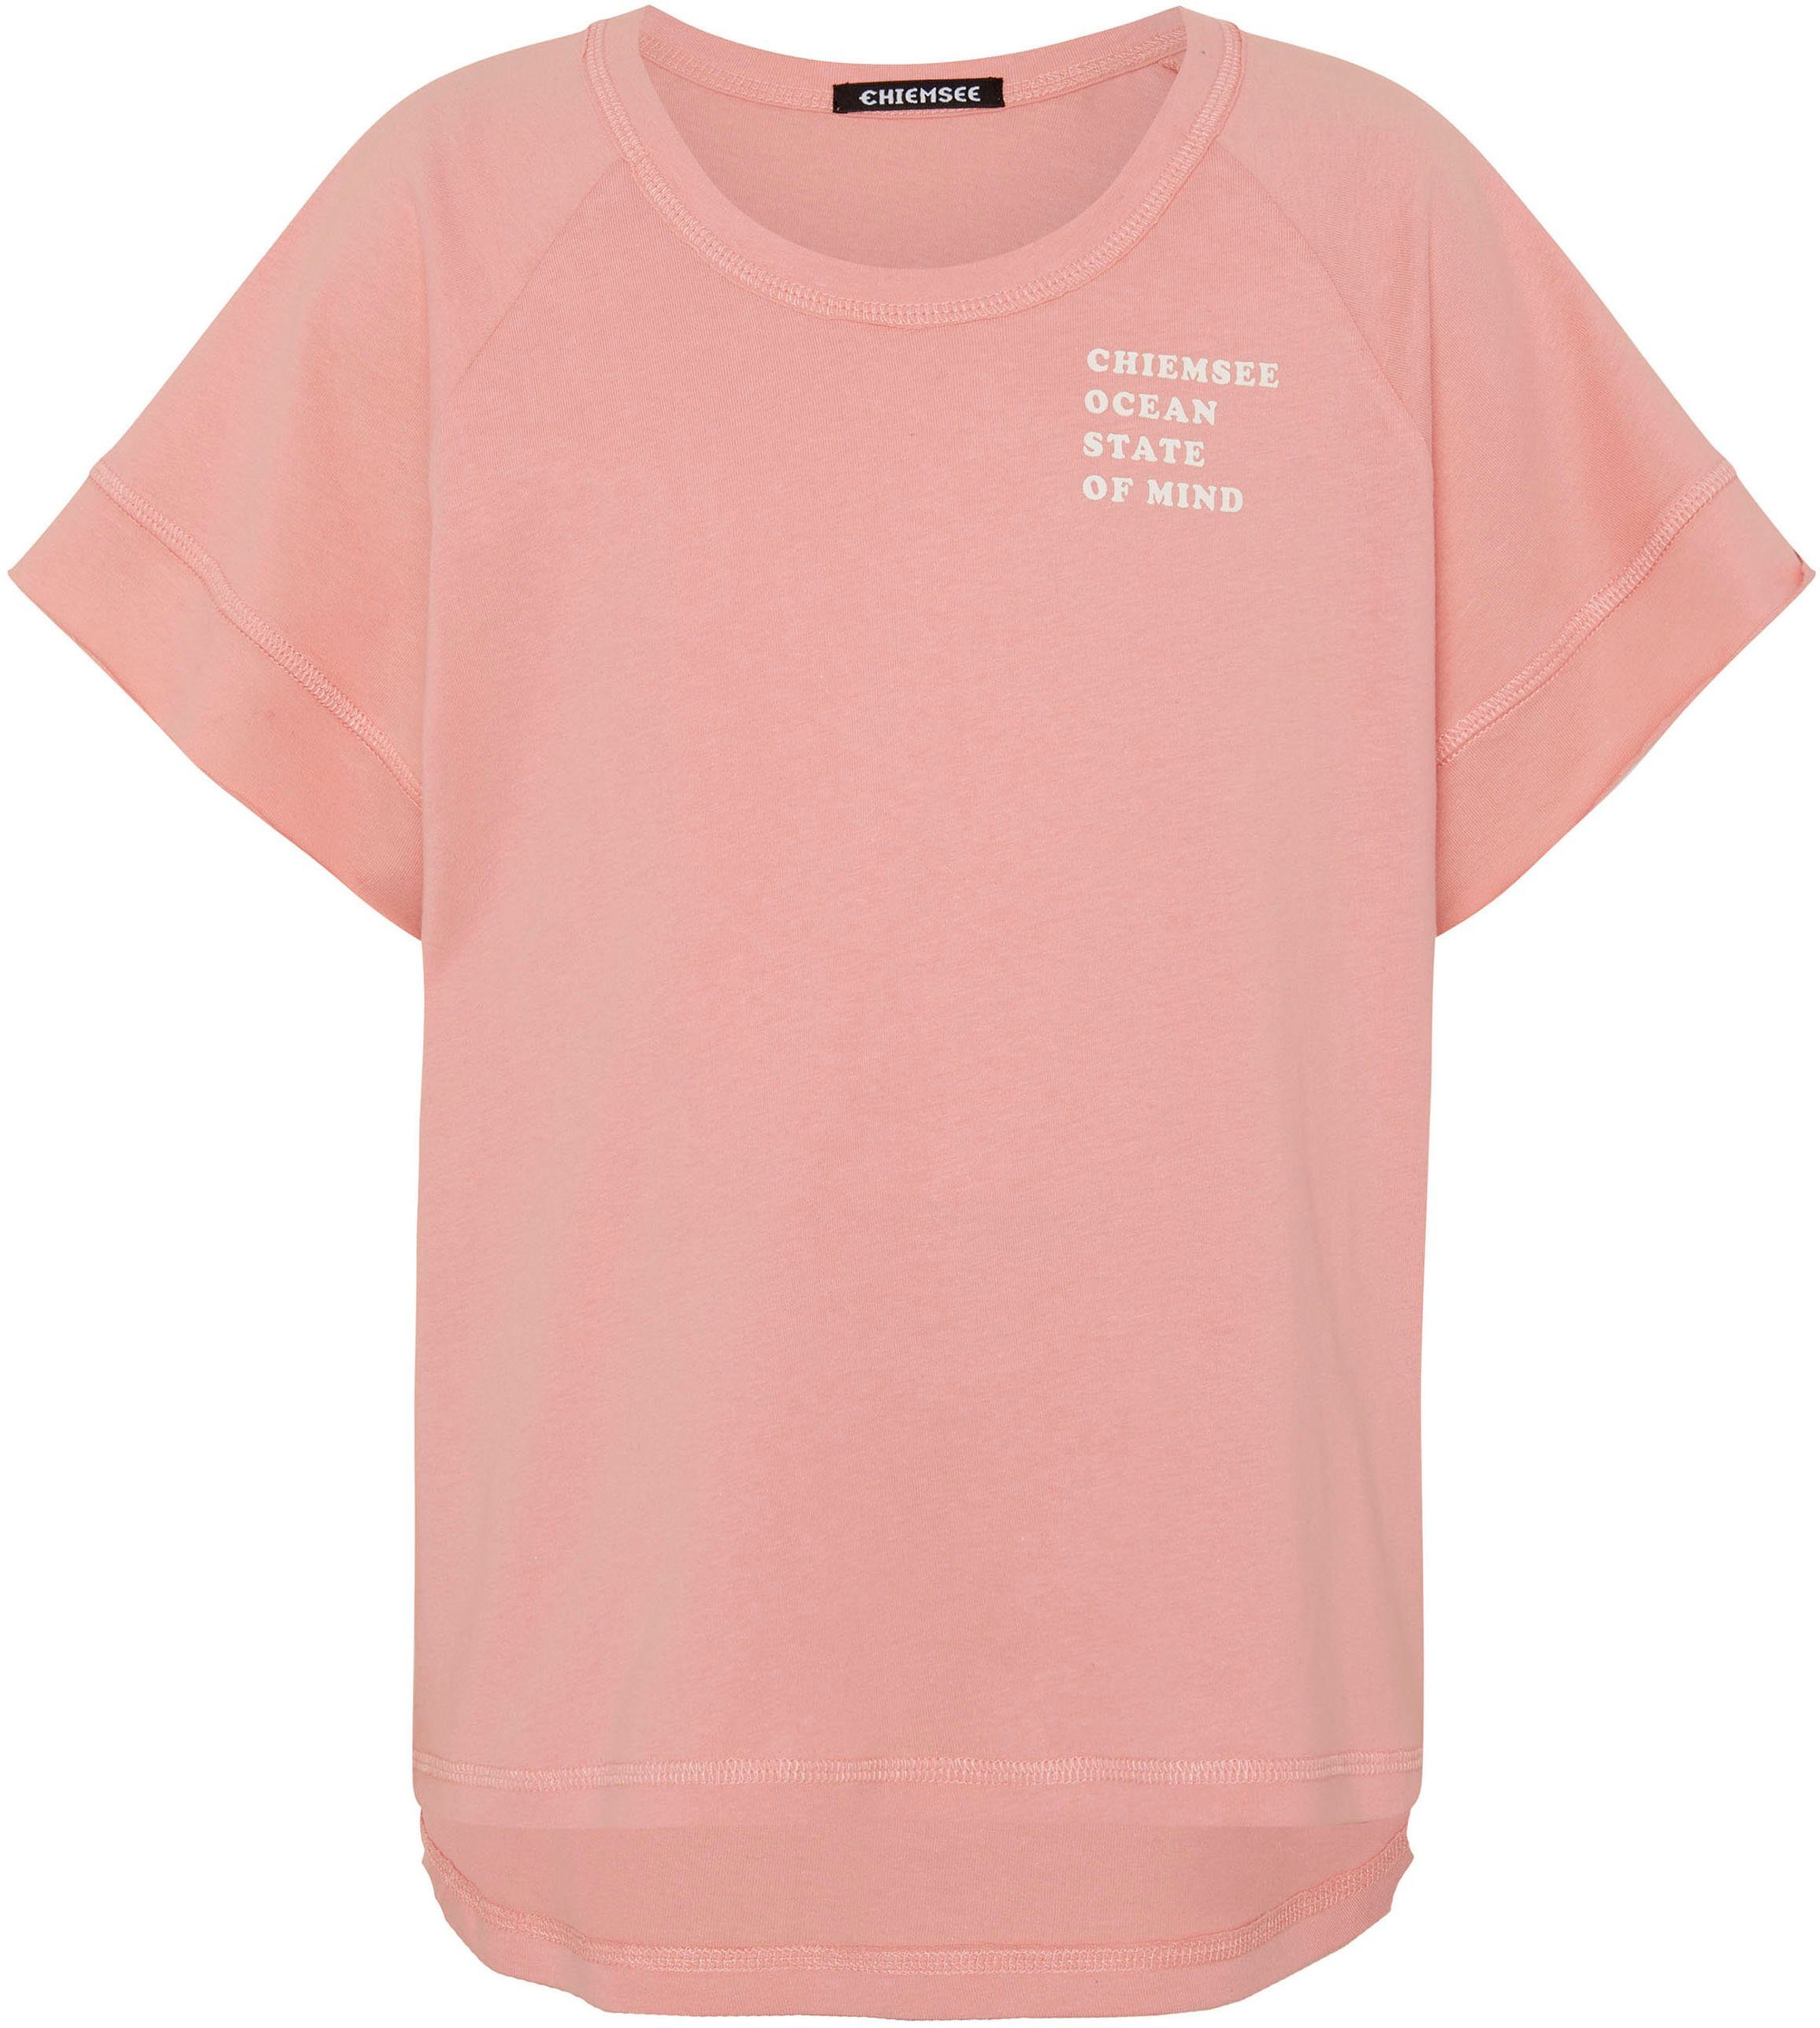 Chiemsee T-Shirt peachn'cream